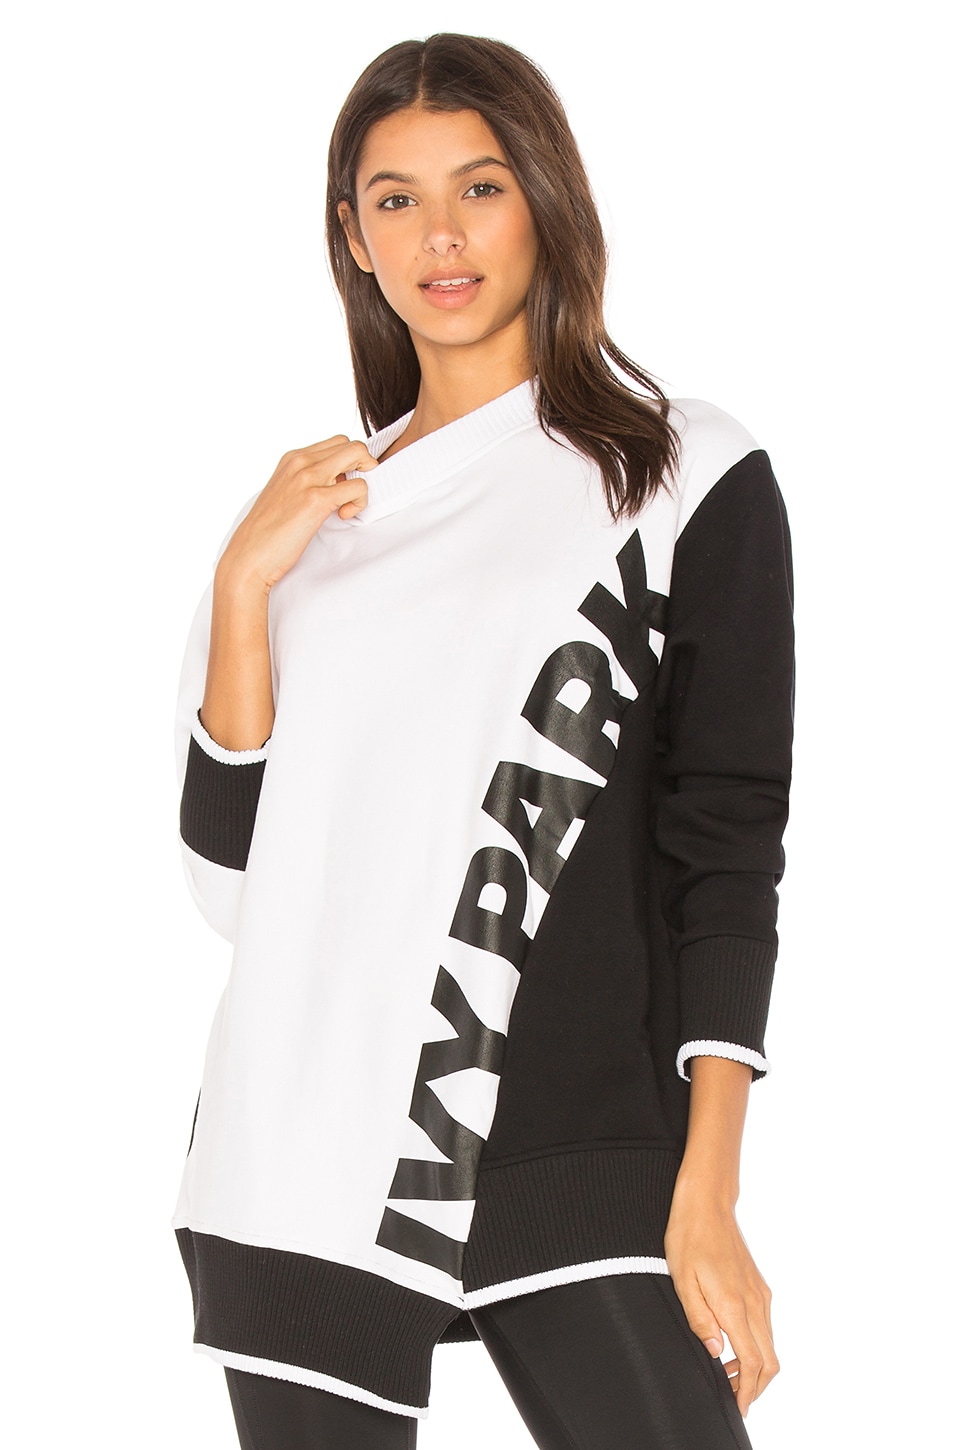 IVY PARK Colorblock Sweatshirt in Black & White | REVOLVE